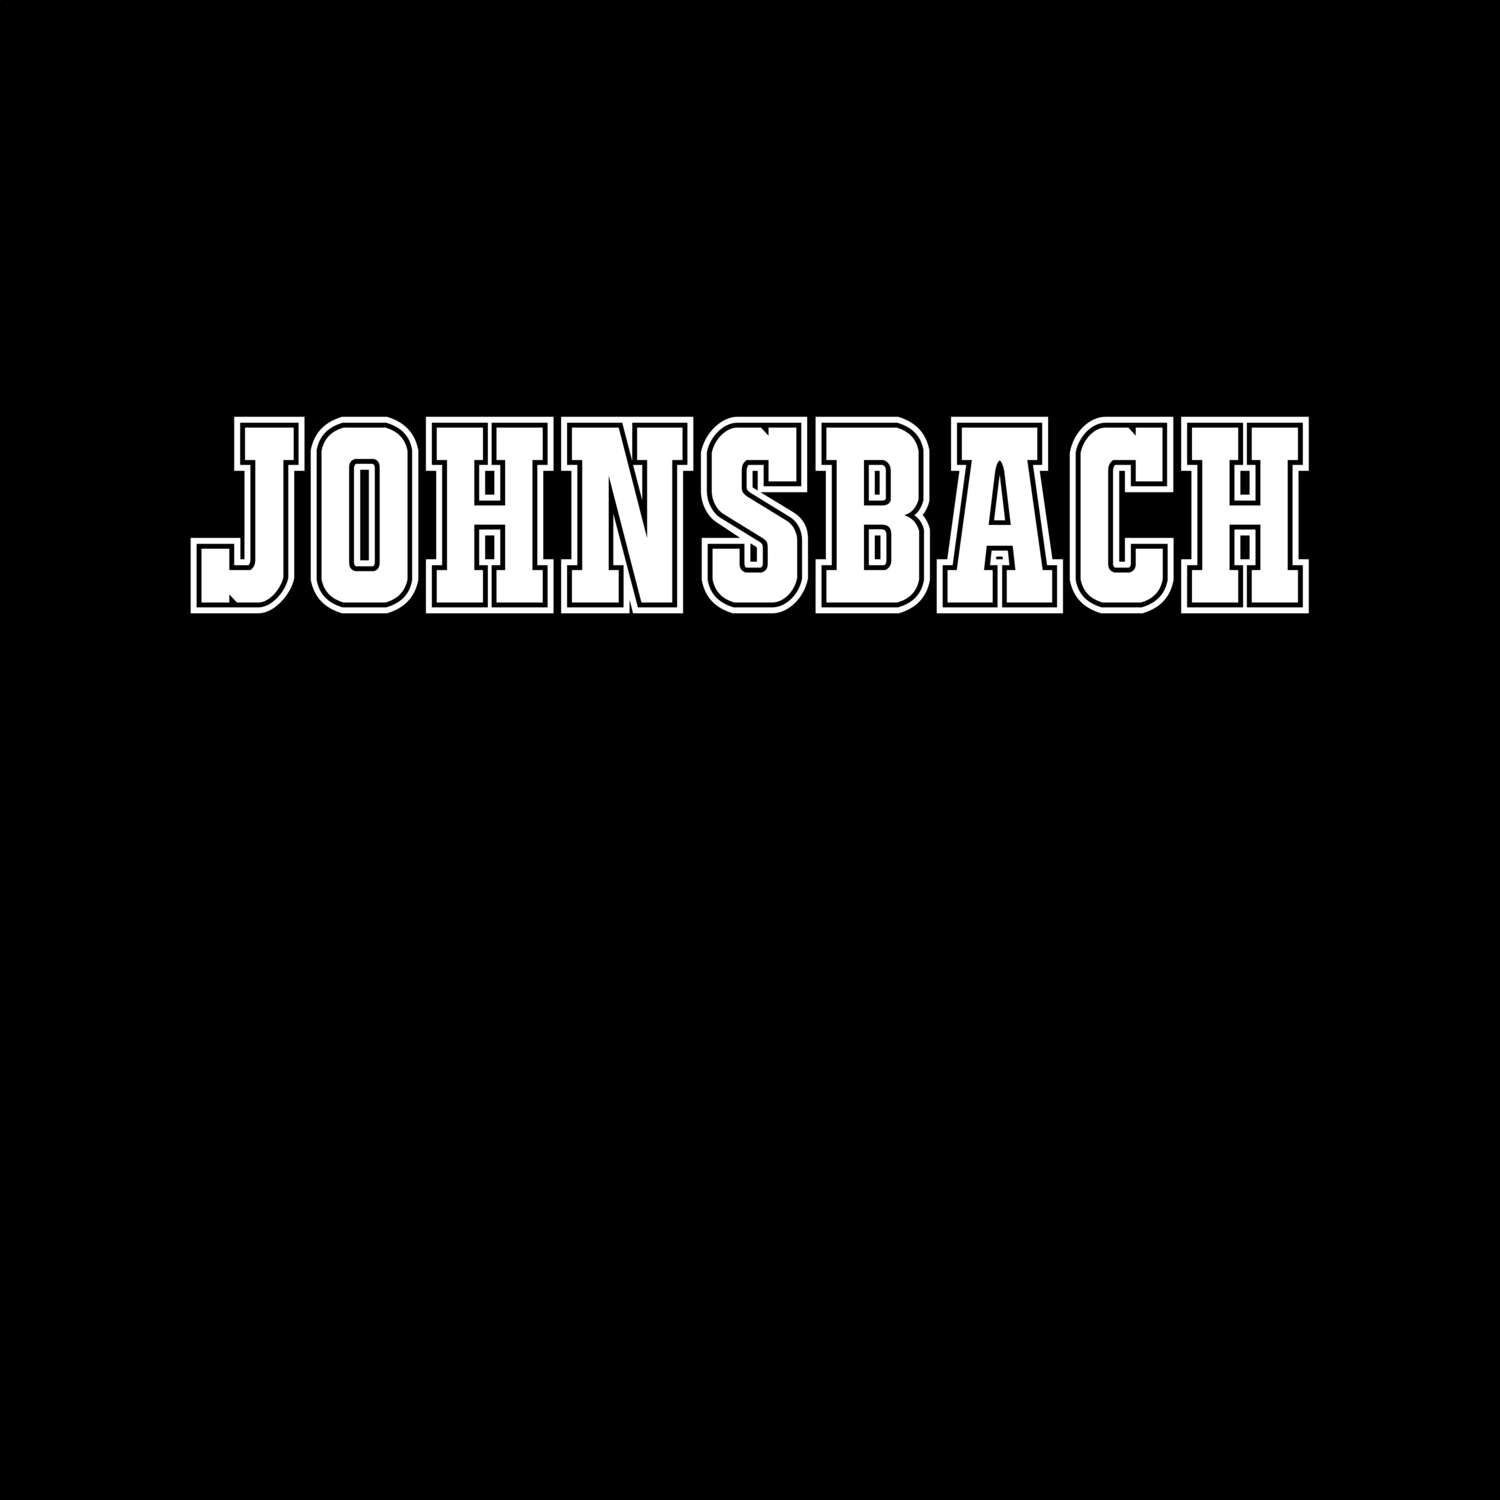 Johnsbach T-Shirt »Classic«